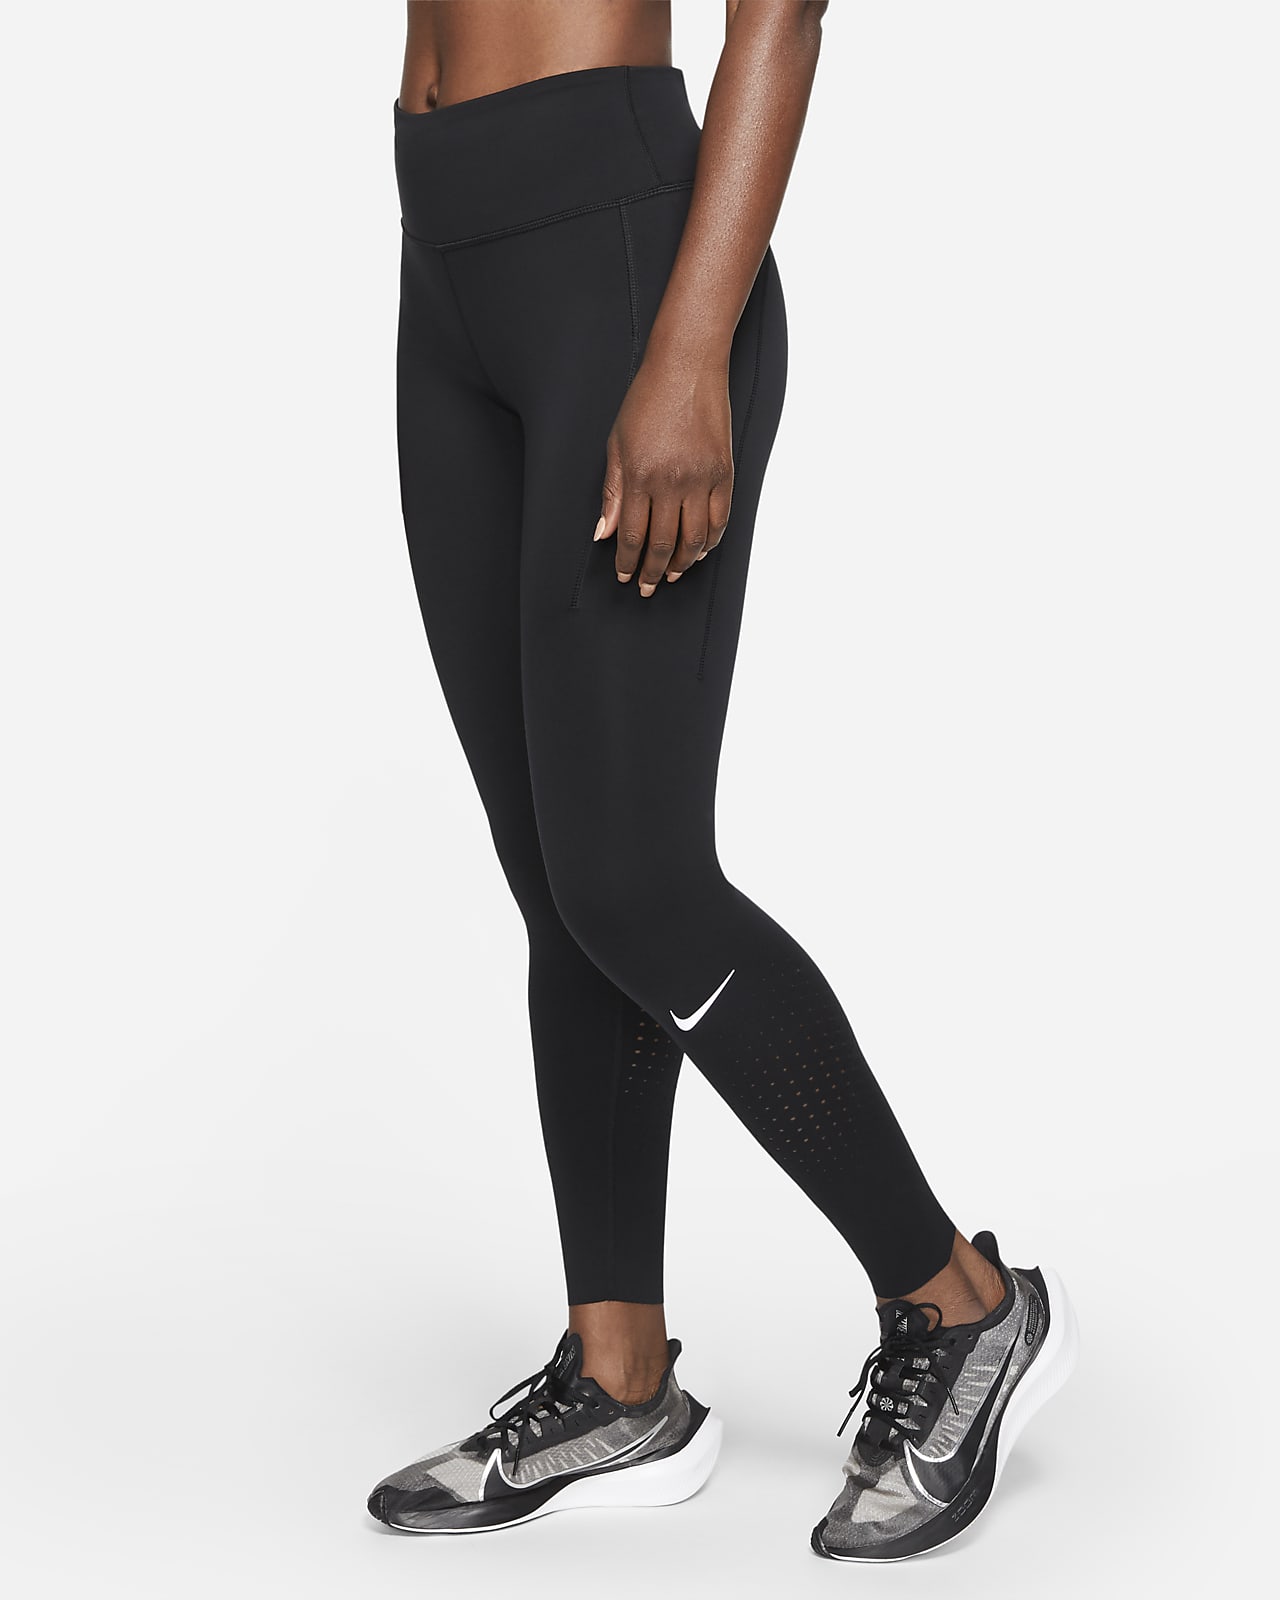 Nike Epic Luxe Leggings de cintura mitjana amb butxaca - Dona